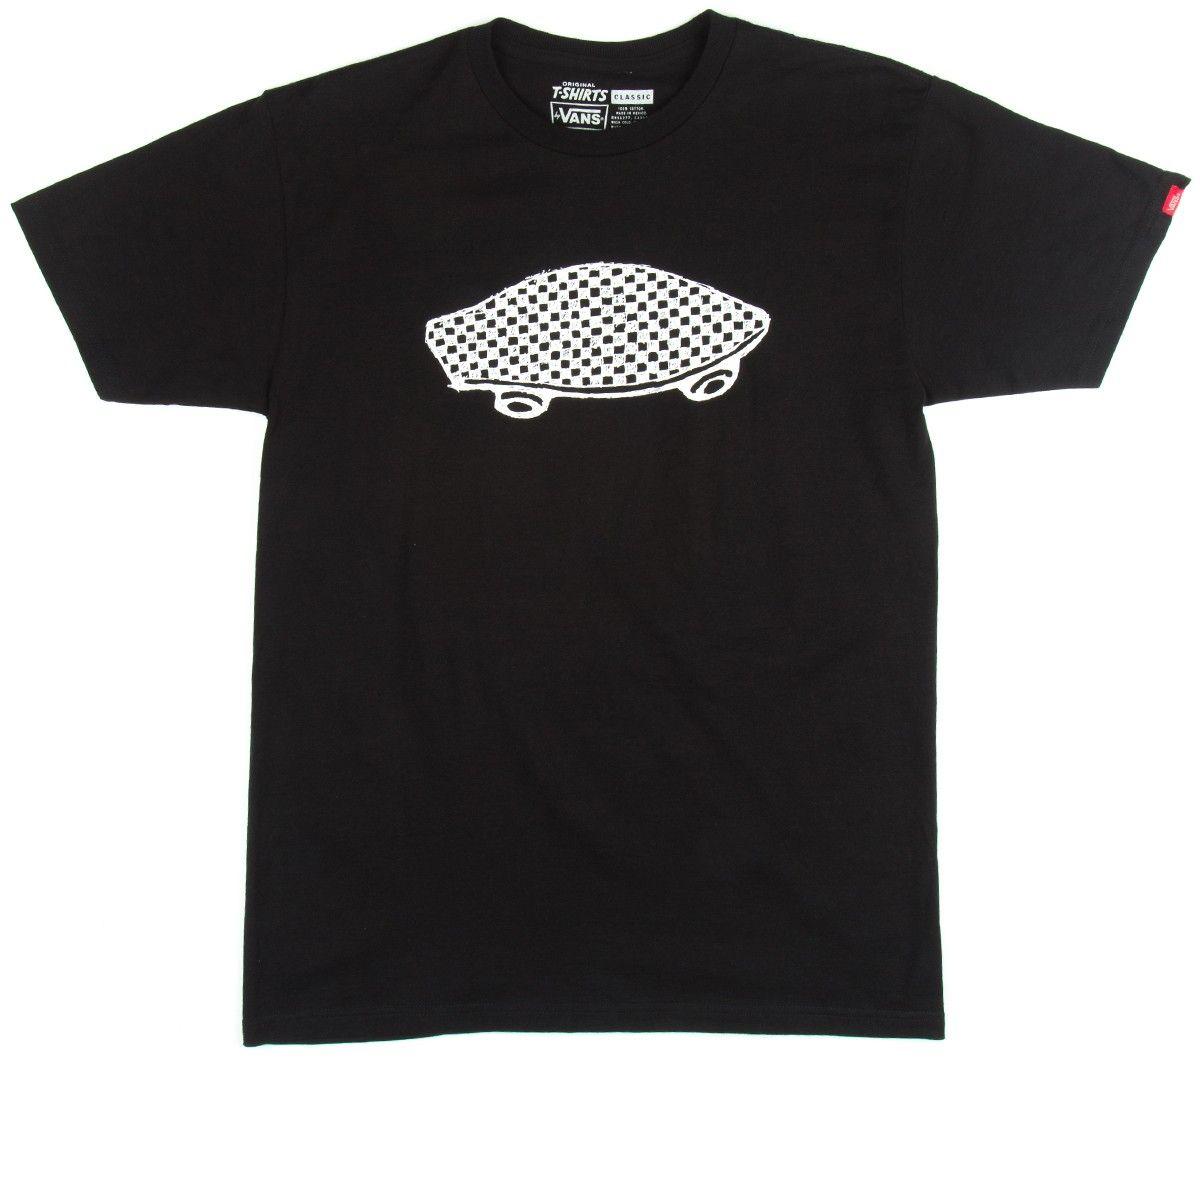 Checkerboard Vans Logo - Vans Checkerboard OTW Logo T-Shirt - Black